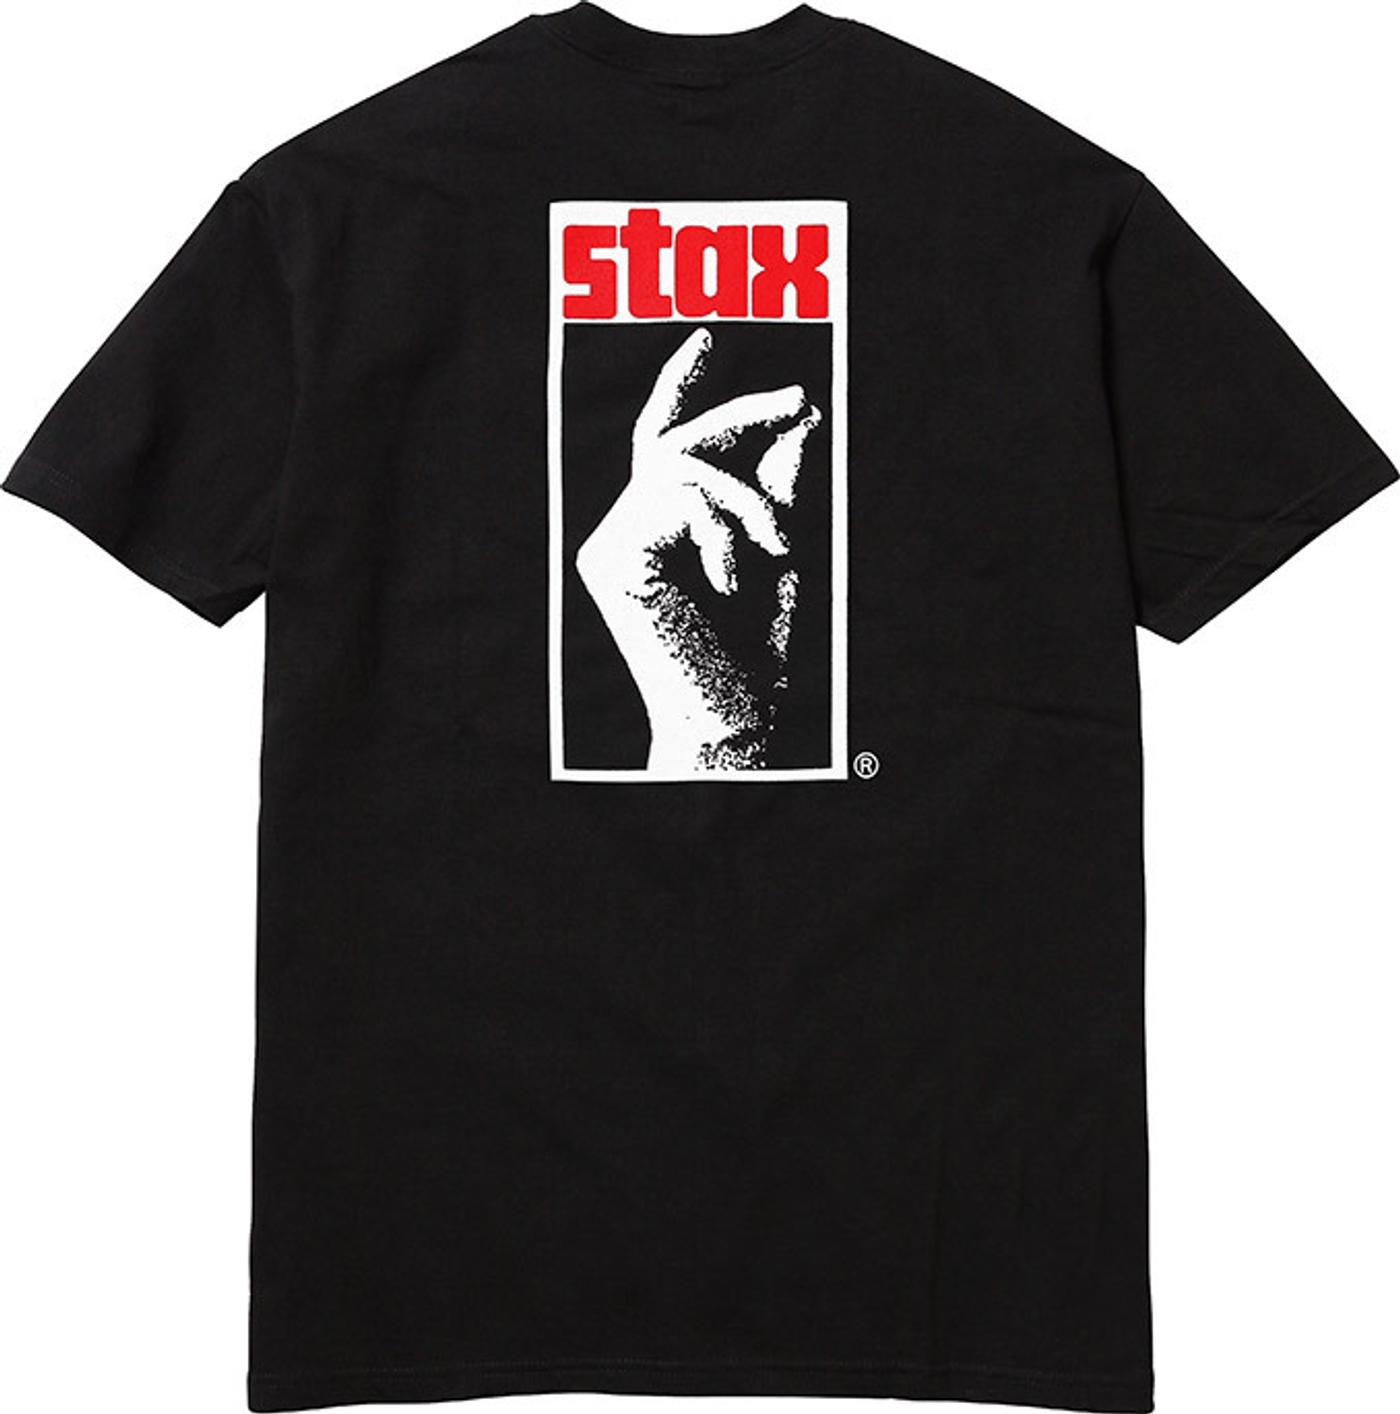 Stax Logo Tee 
All cotton classic Supreme t-shirt (3/5)